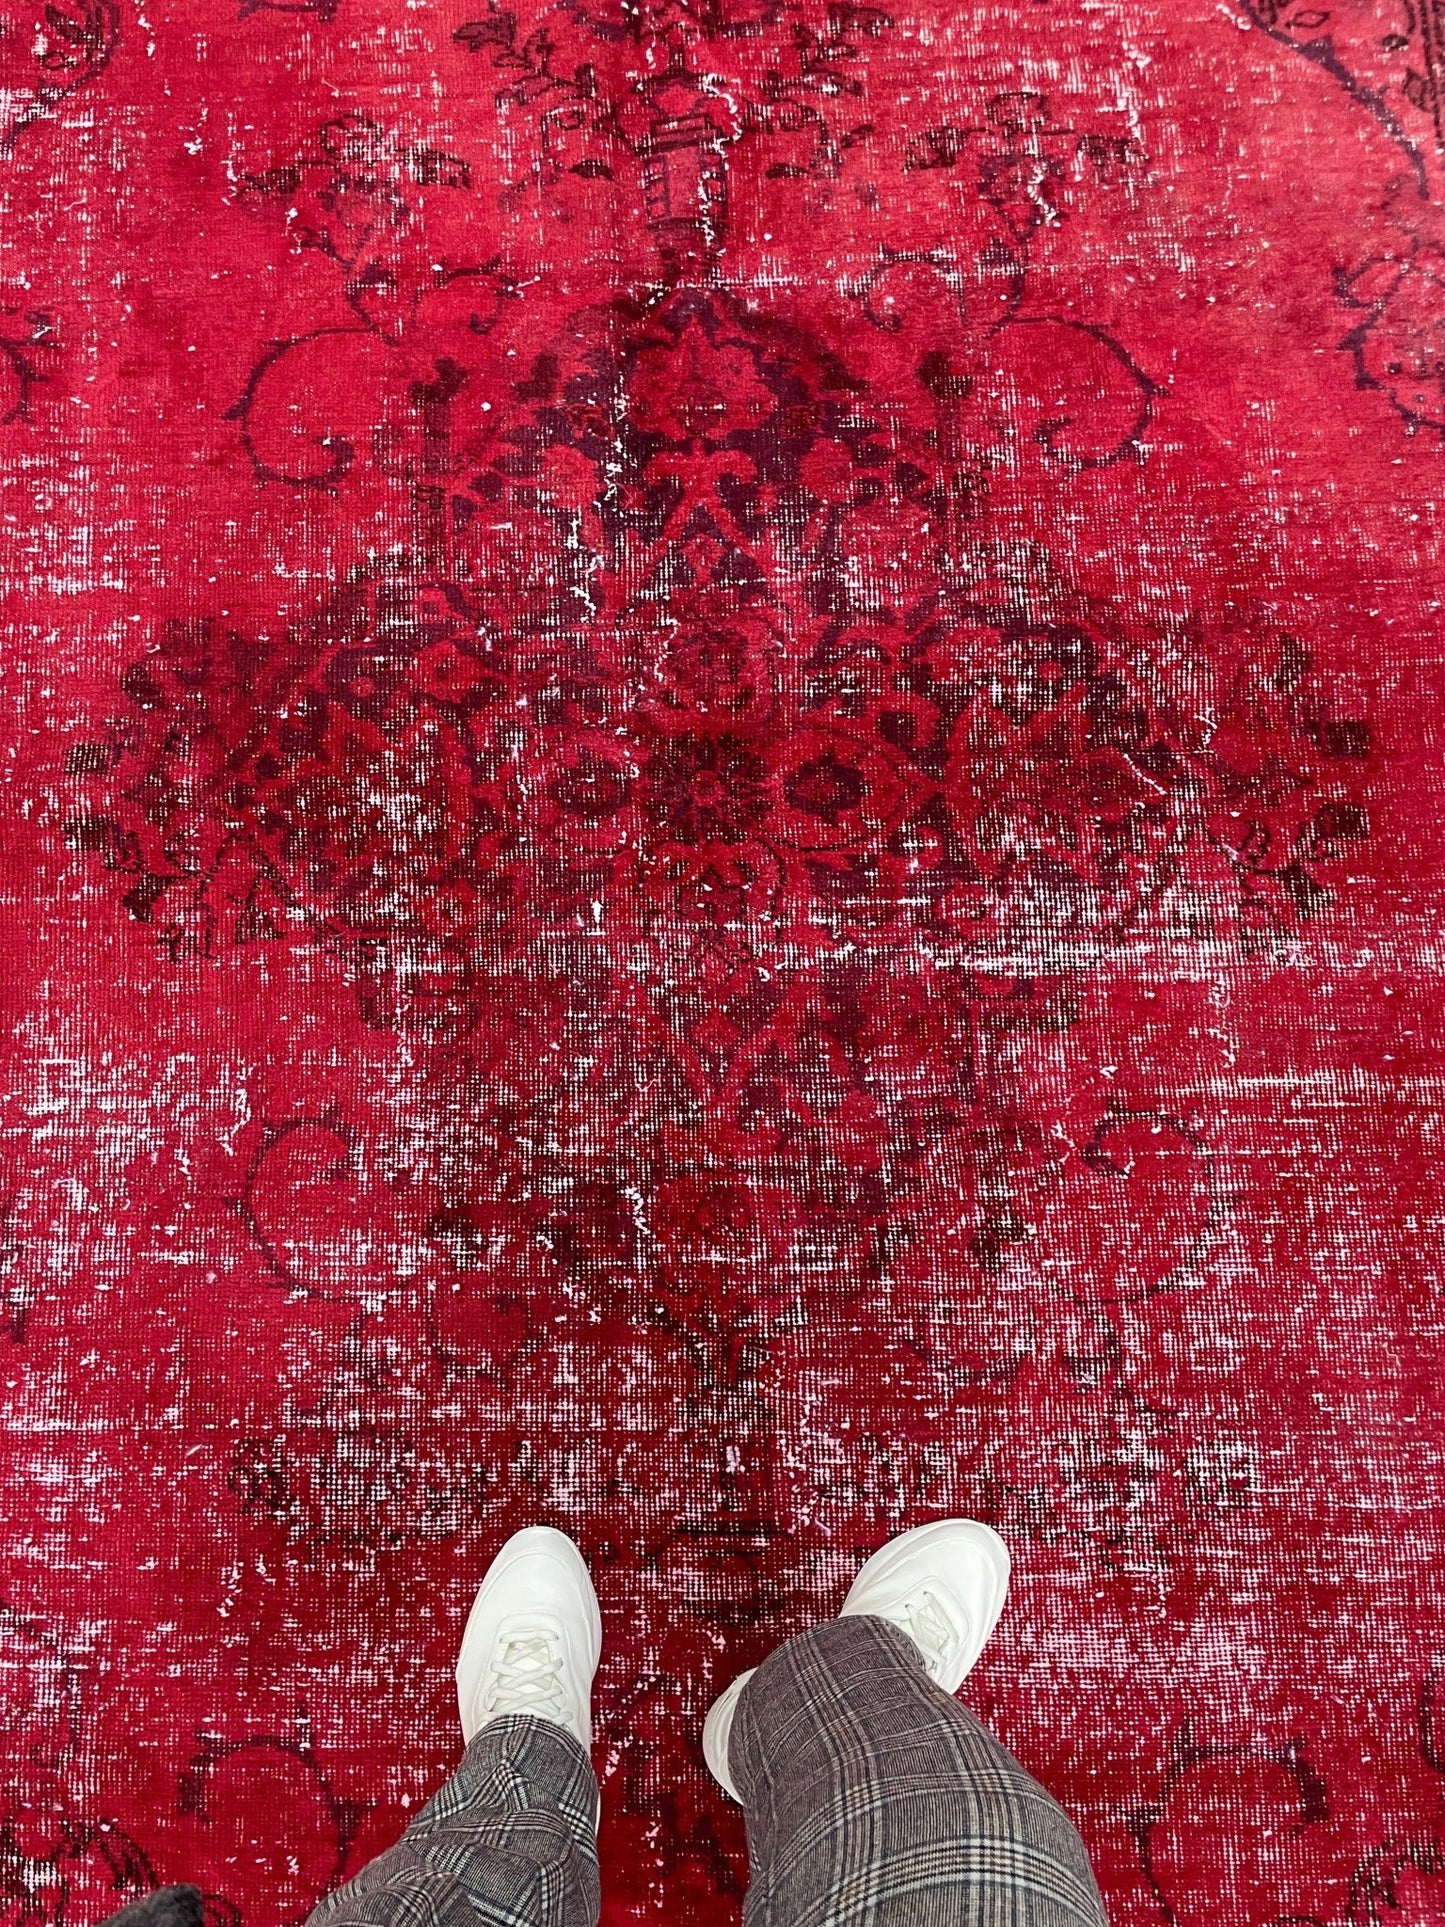 overdyed red big turkish vintage rug shop san francisco bay area berkeley palo alto buy rug online shopping